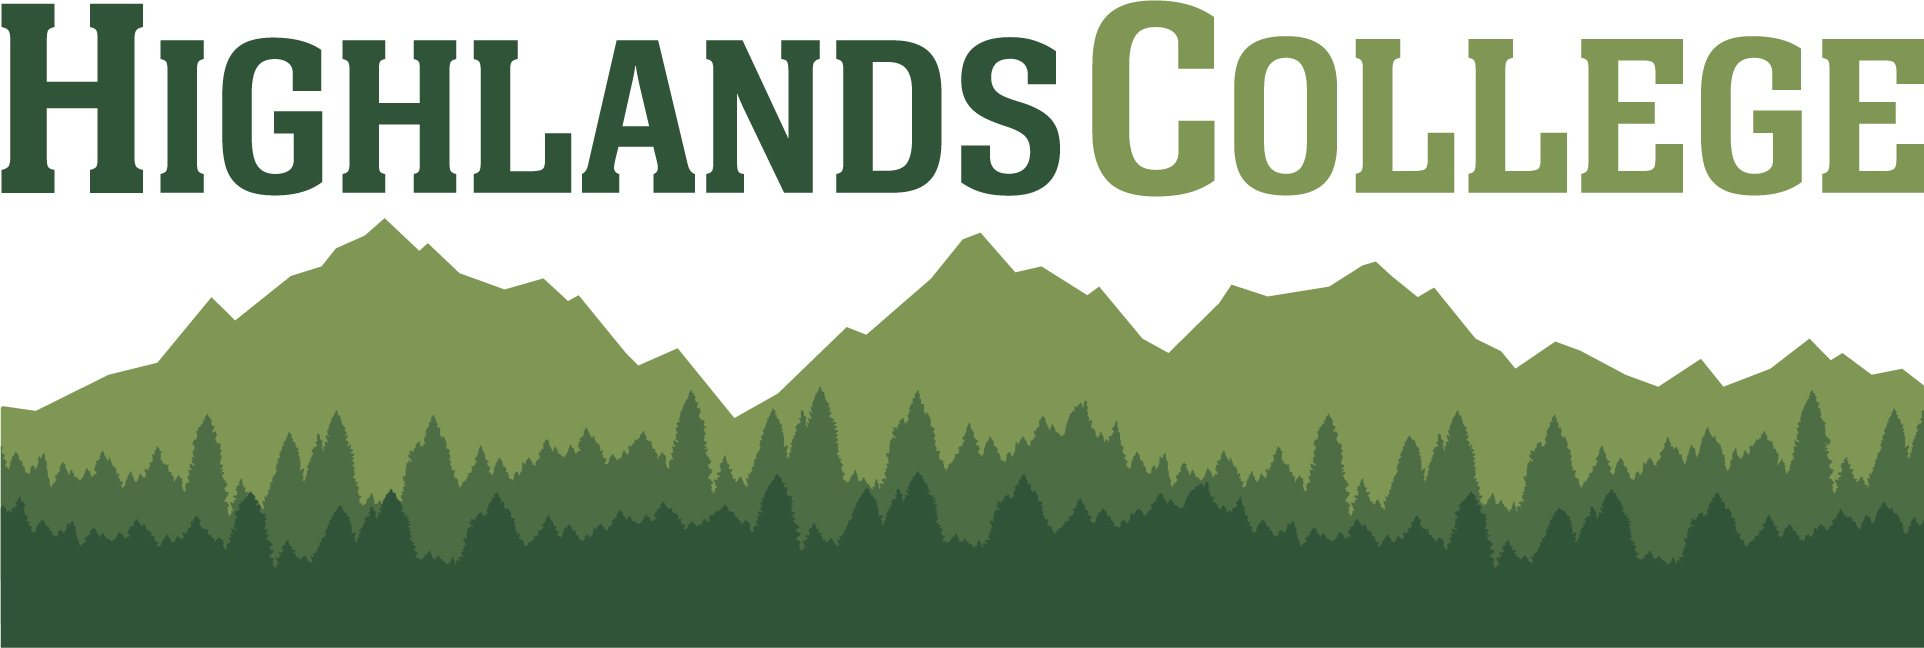 image-959228-highlands-logo-web-c20ad.jpg